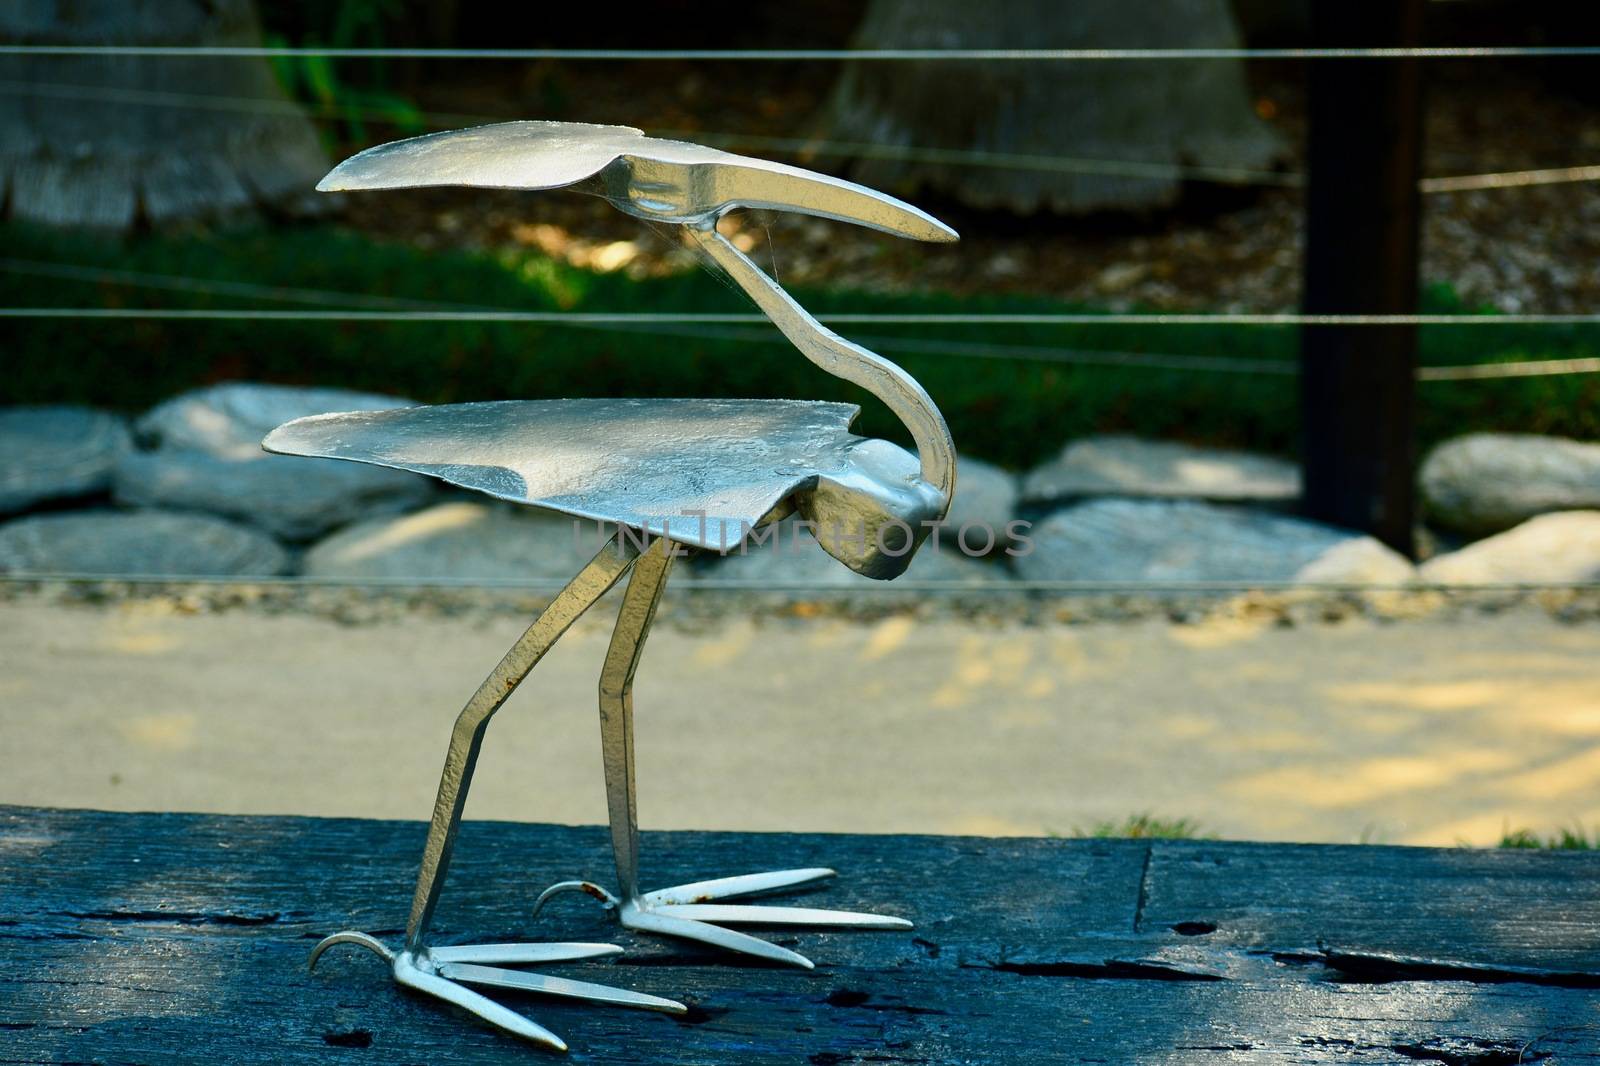 Matakana, New Zealand - Dec 2019: Sculptureum sculpture park. Peculiar modern sculpture made of various gardening tools representing a bird. by Marshalkina